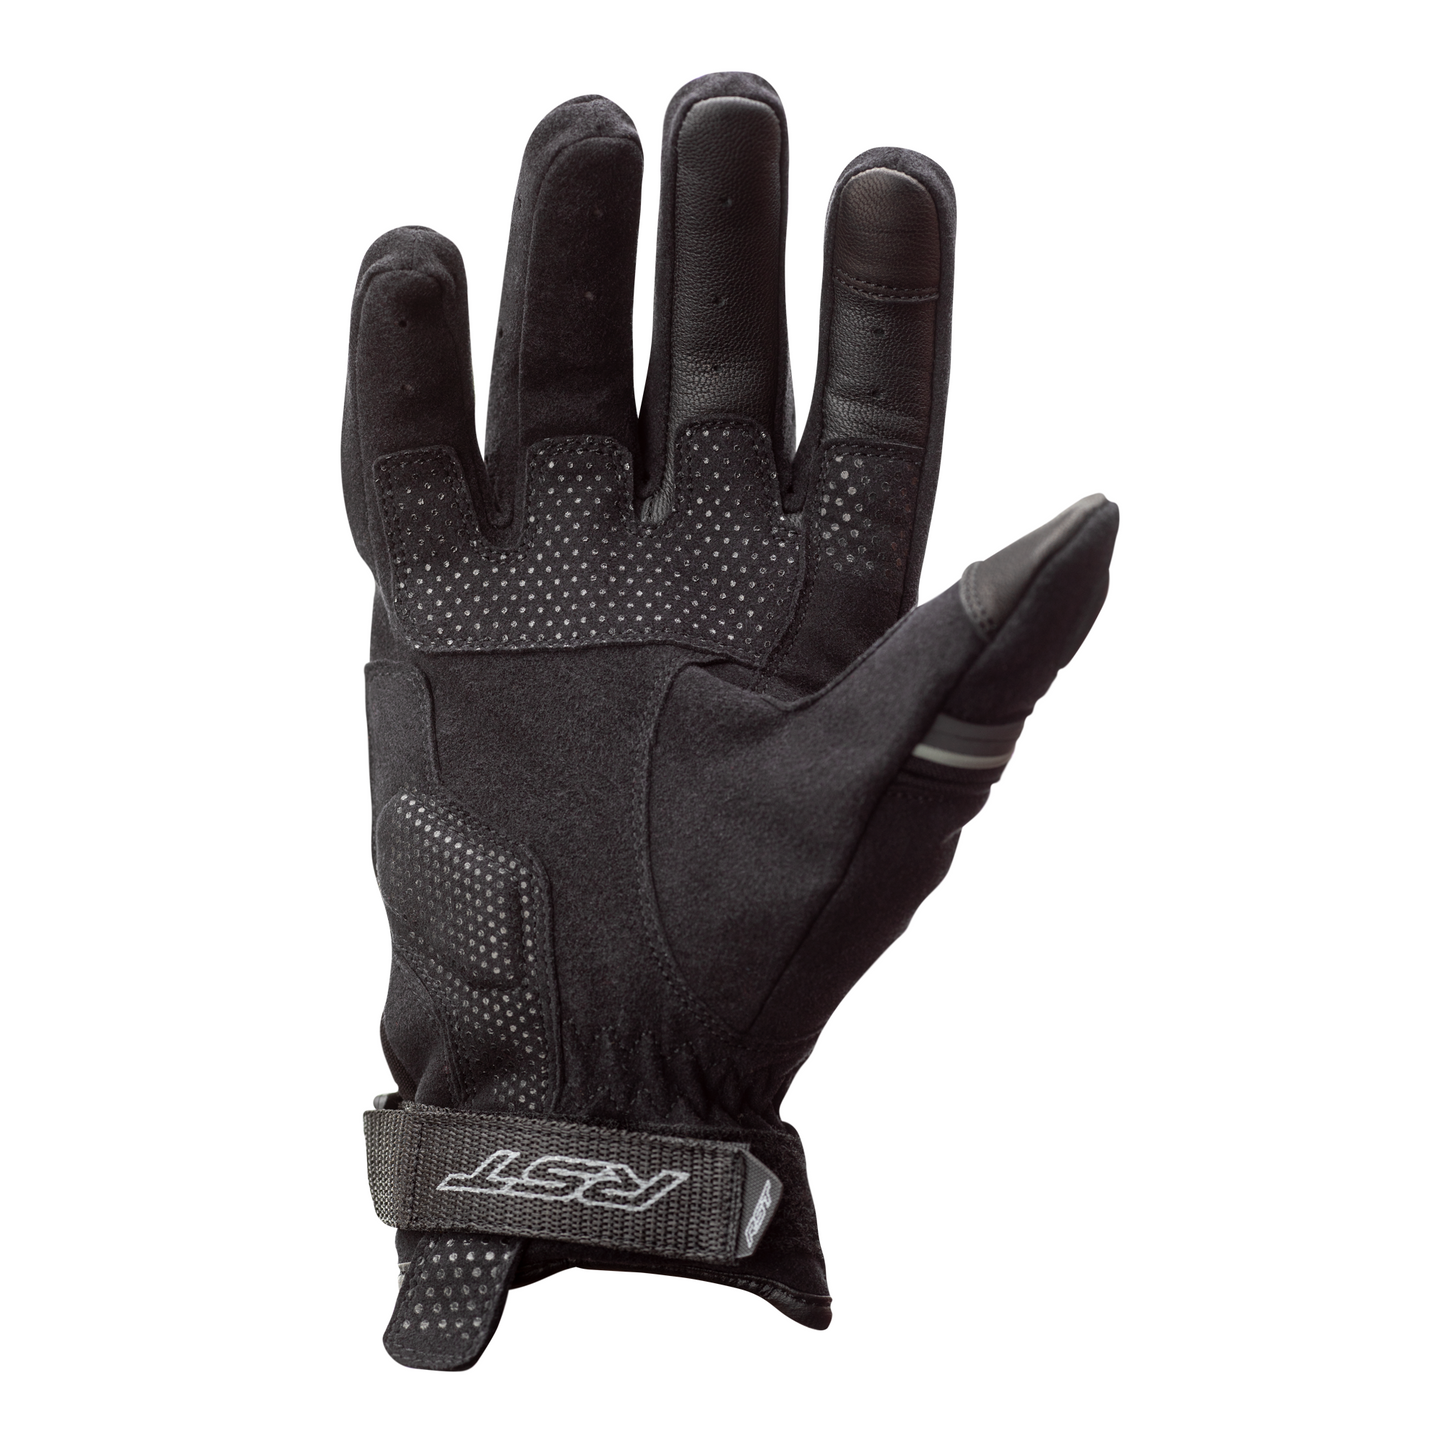 RST Adventure-X CE Gloves - Black